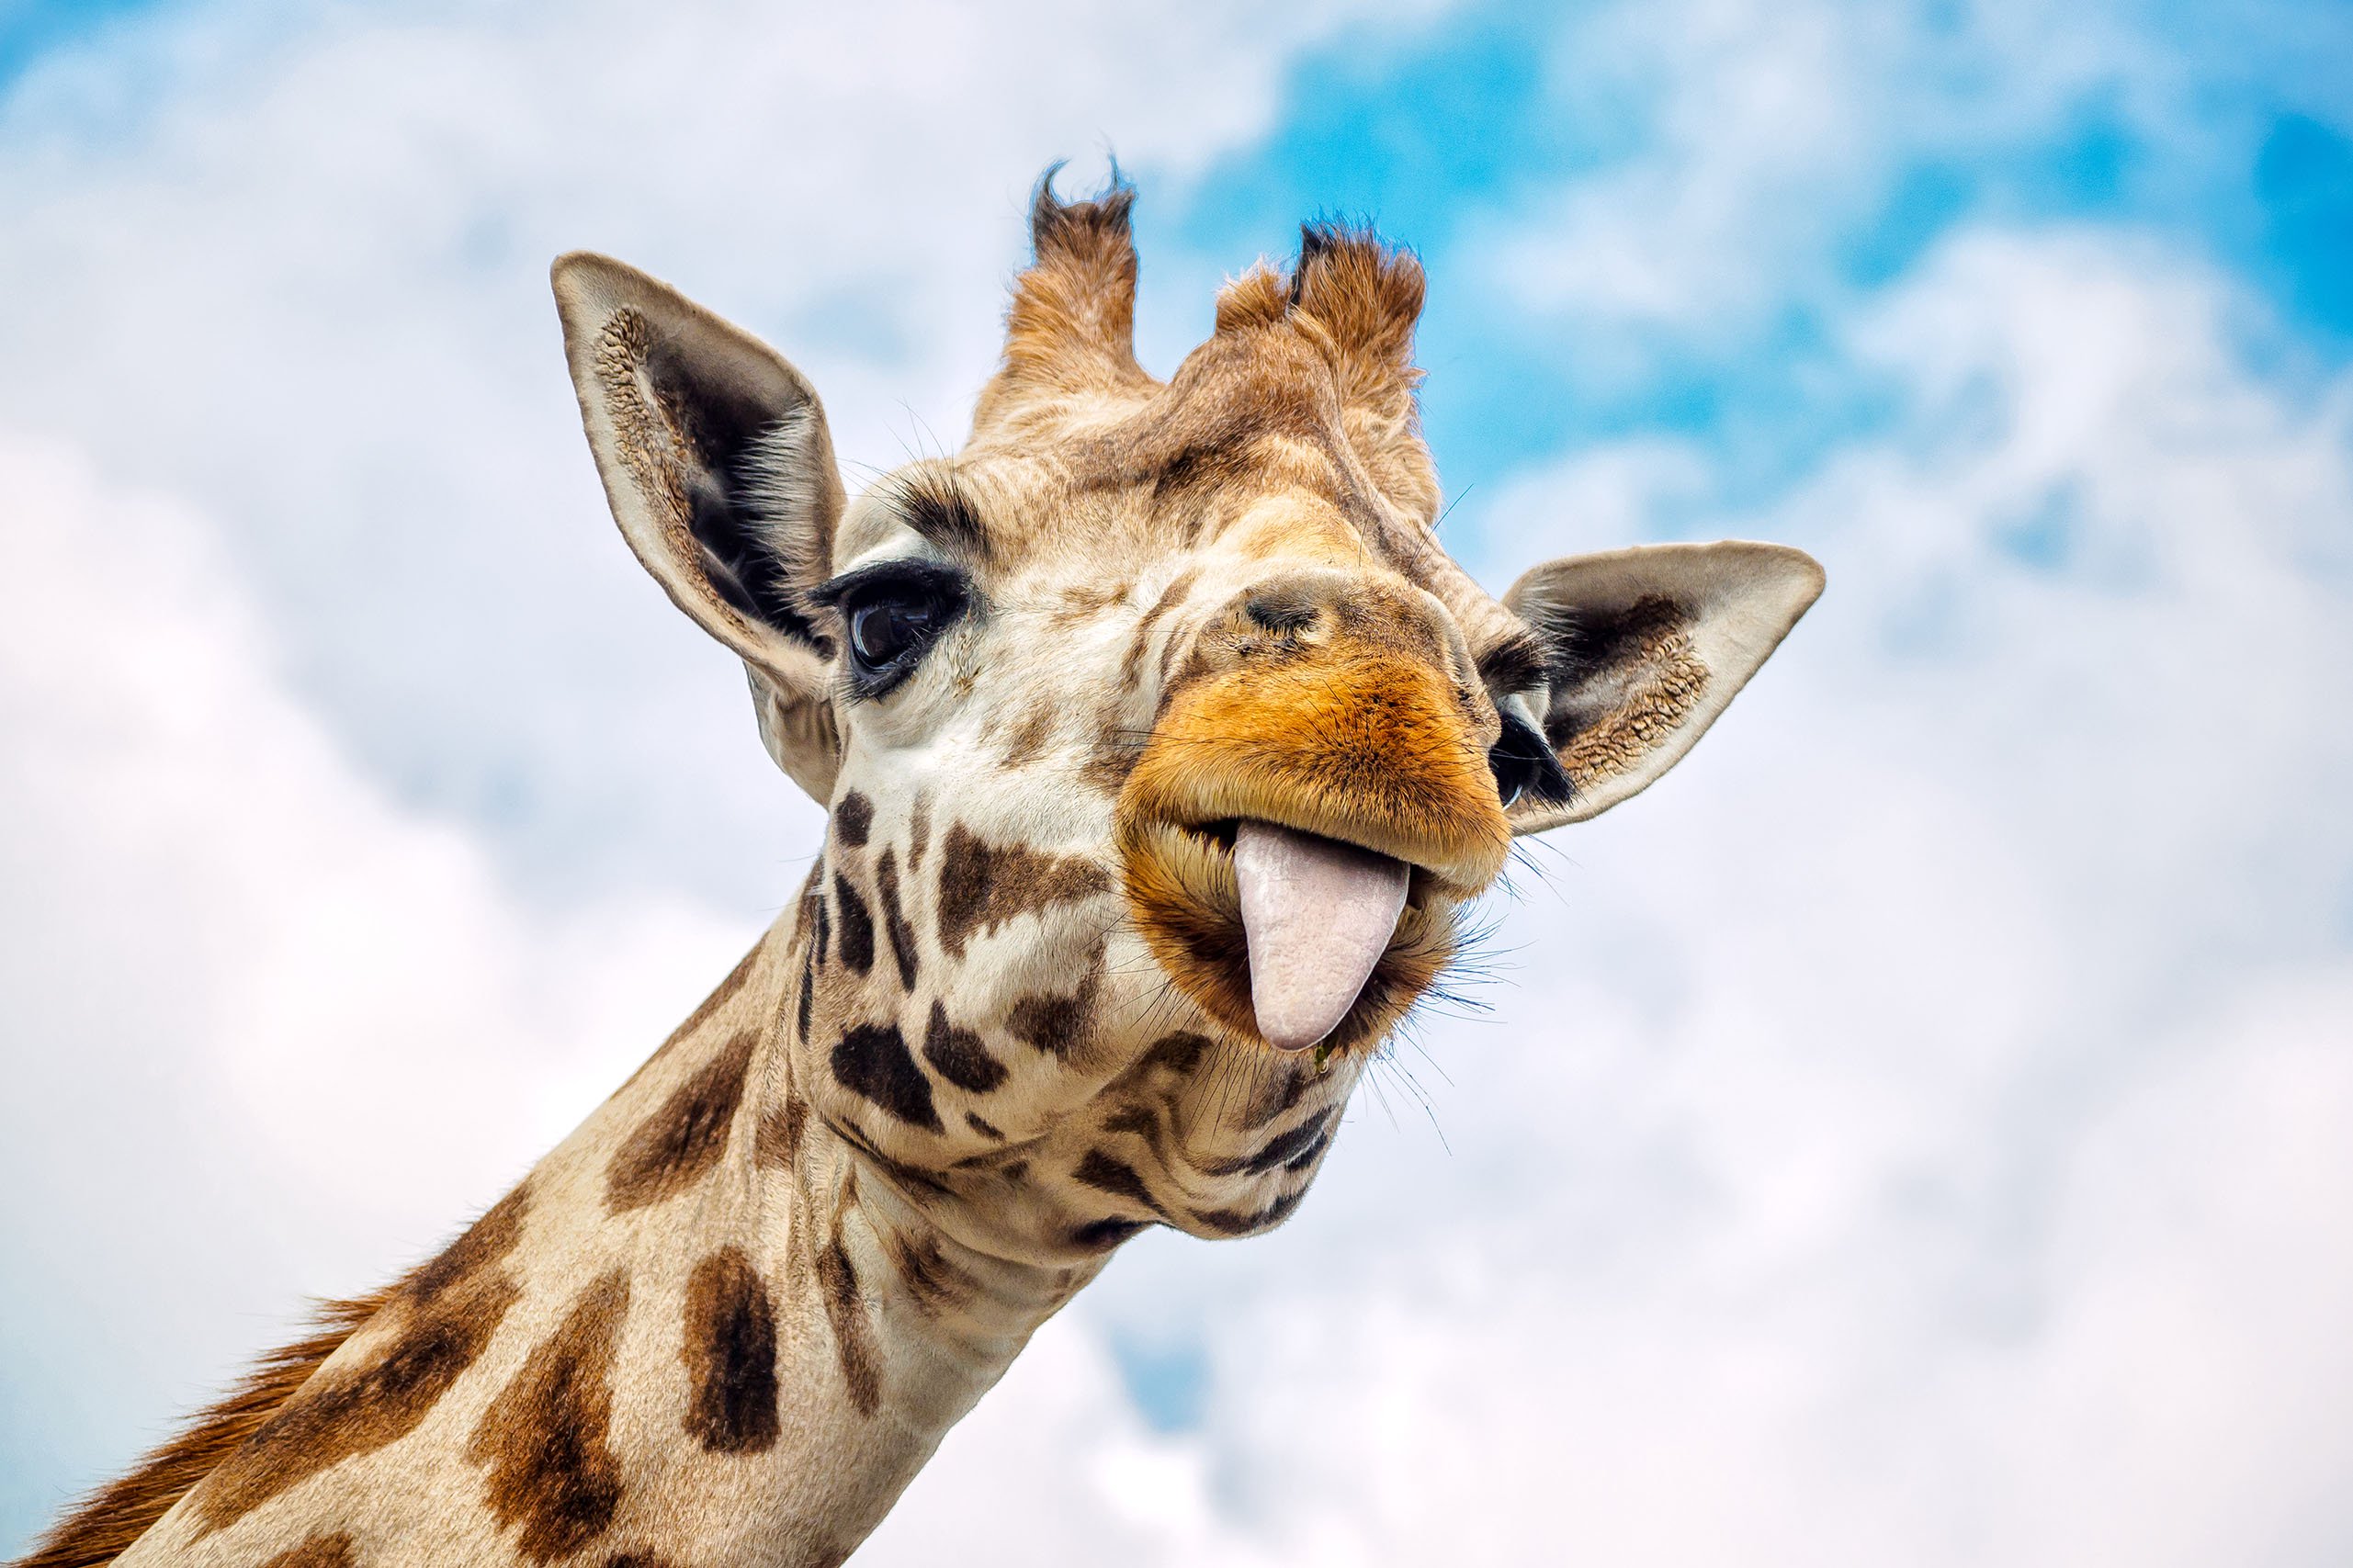 The Internet's Most Famous Pregnant Giraffe Still Hasn't Given Birth